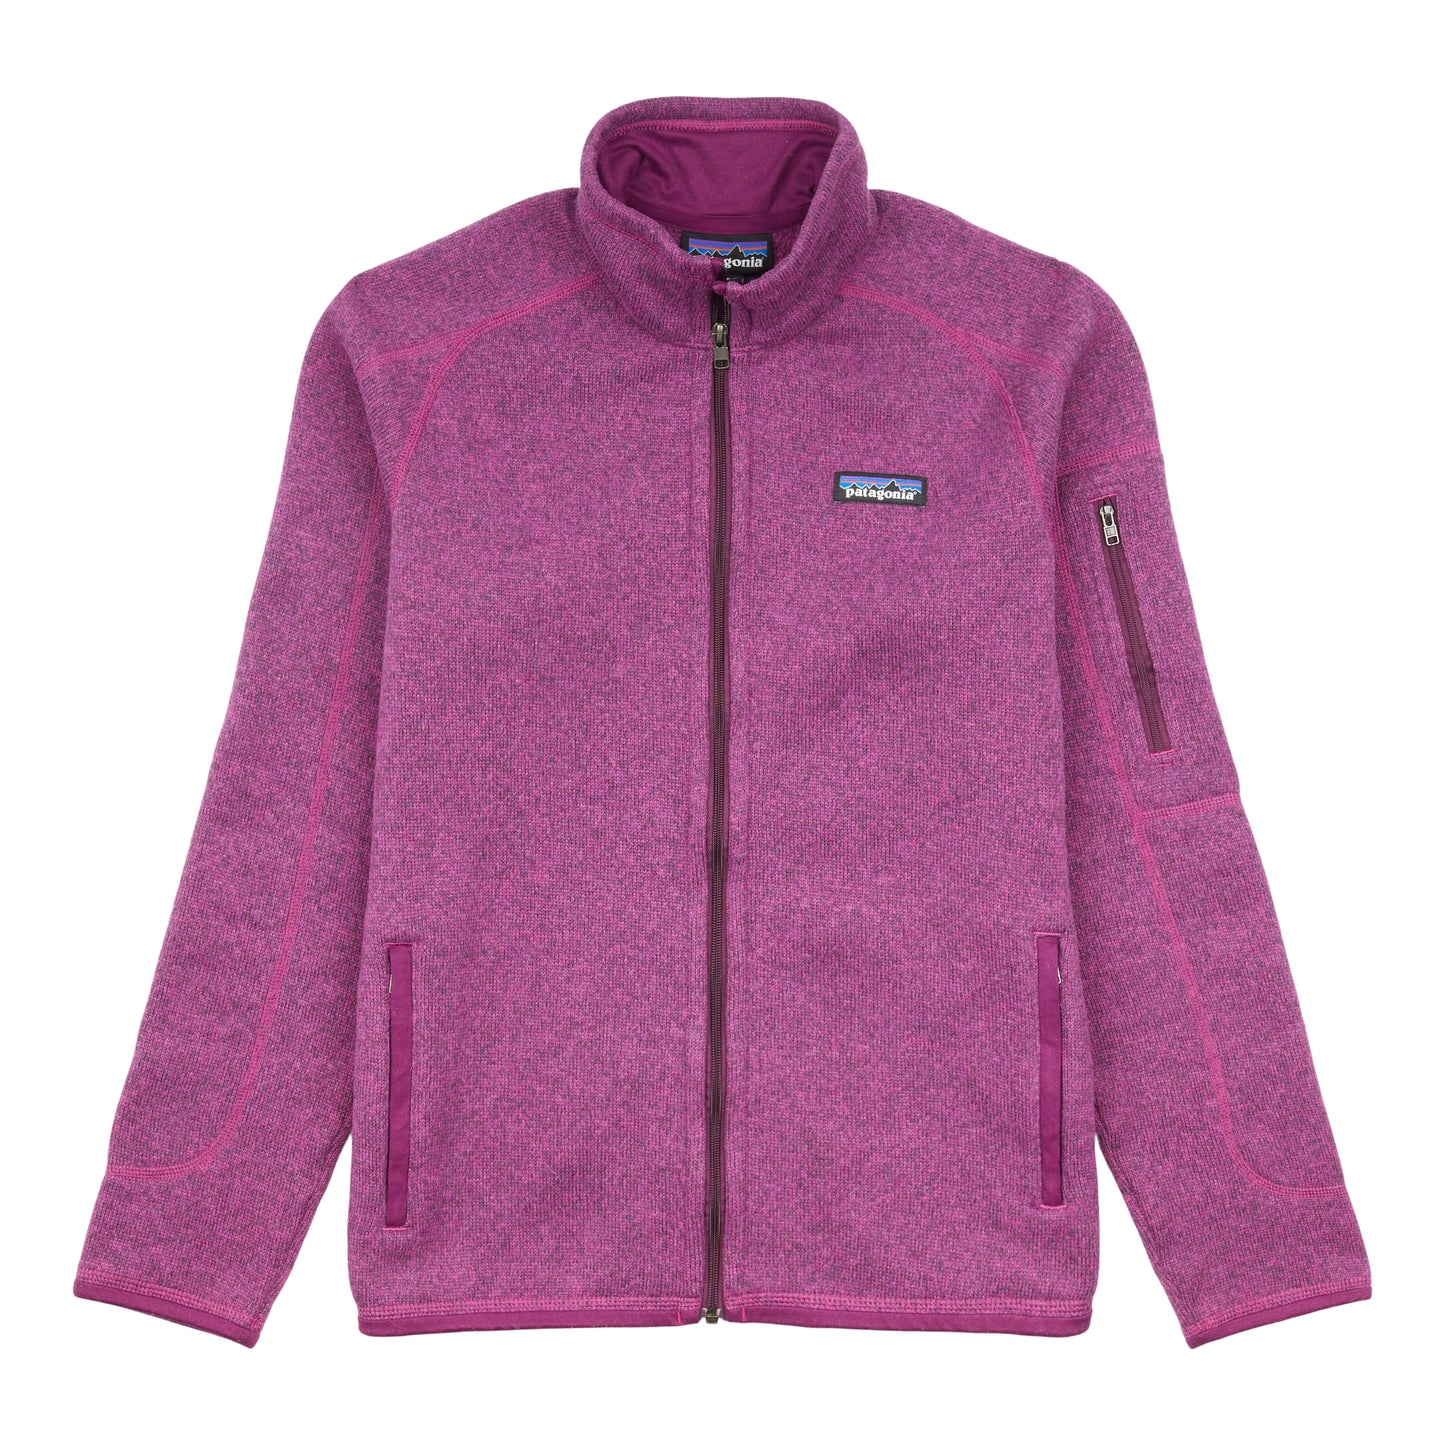 Patagonia Womens Patagonia Better Sweater Jacket size L